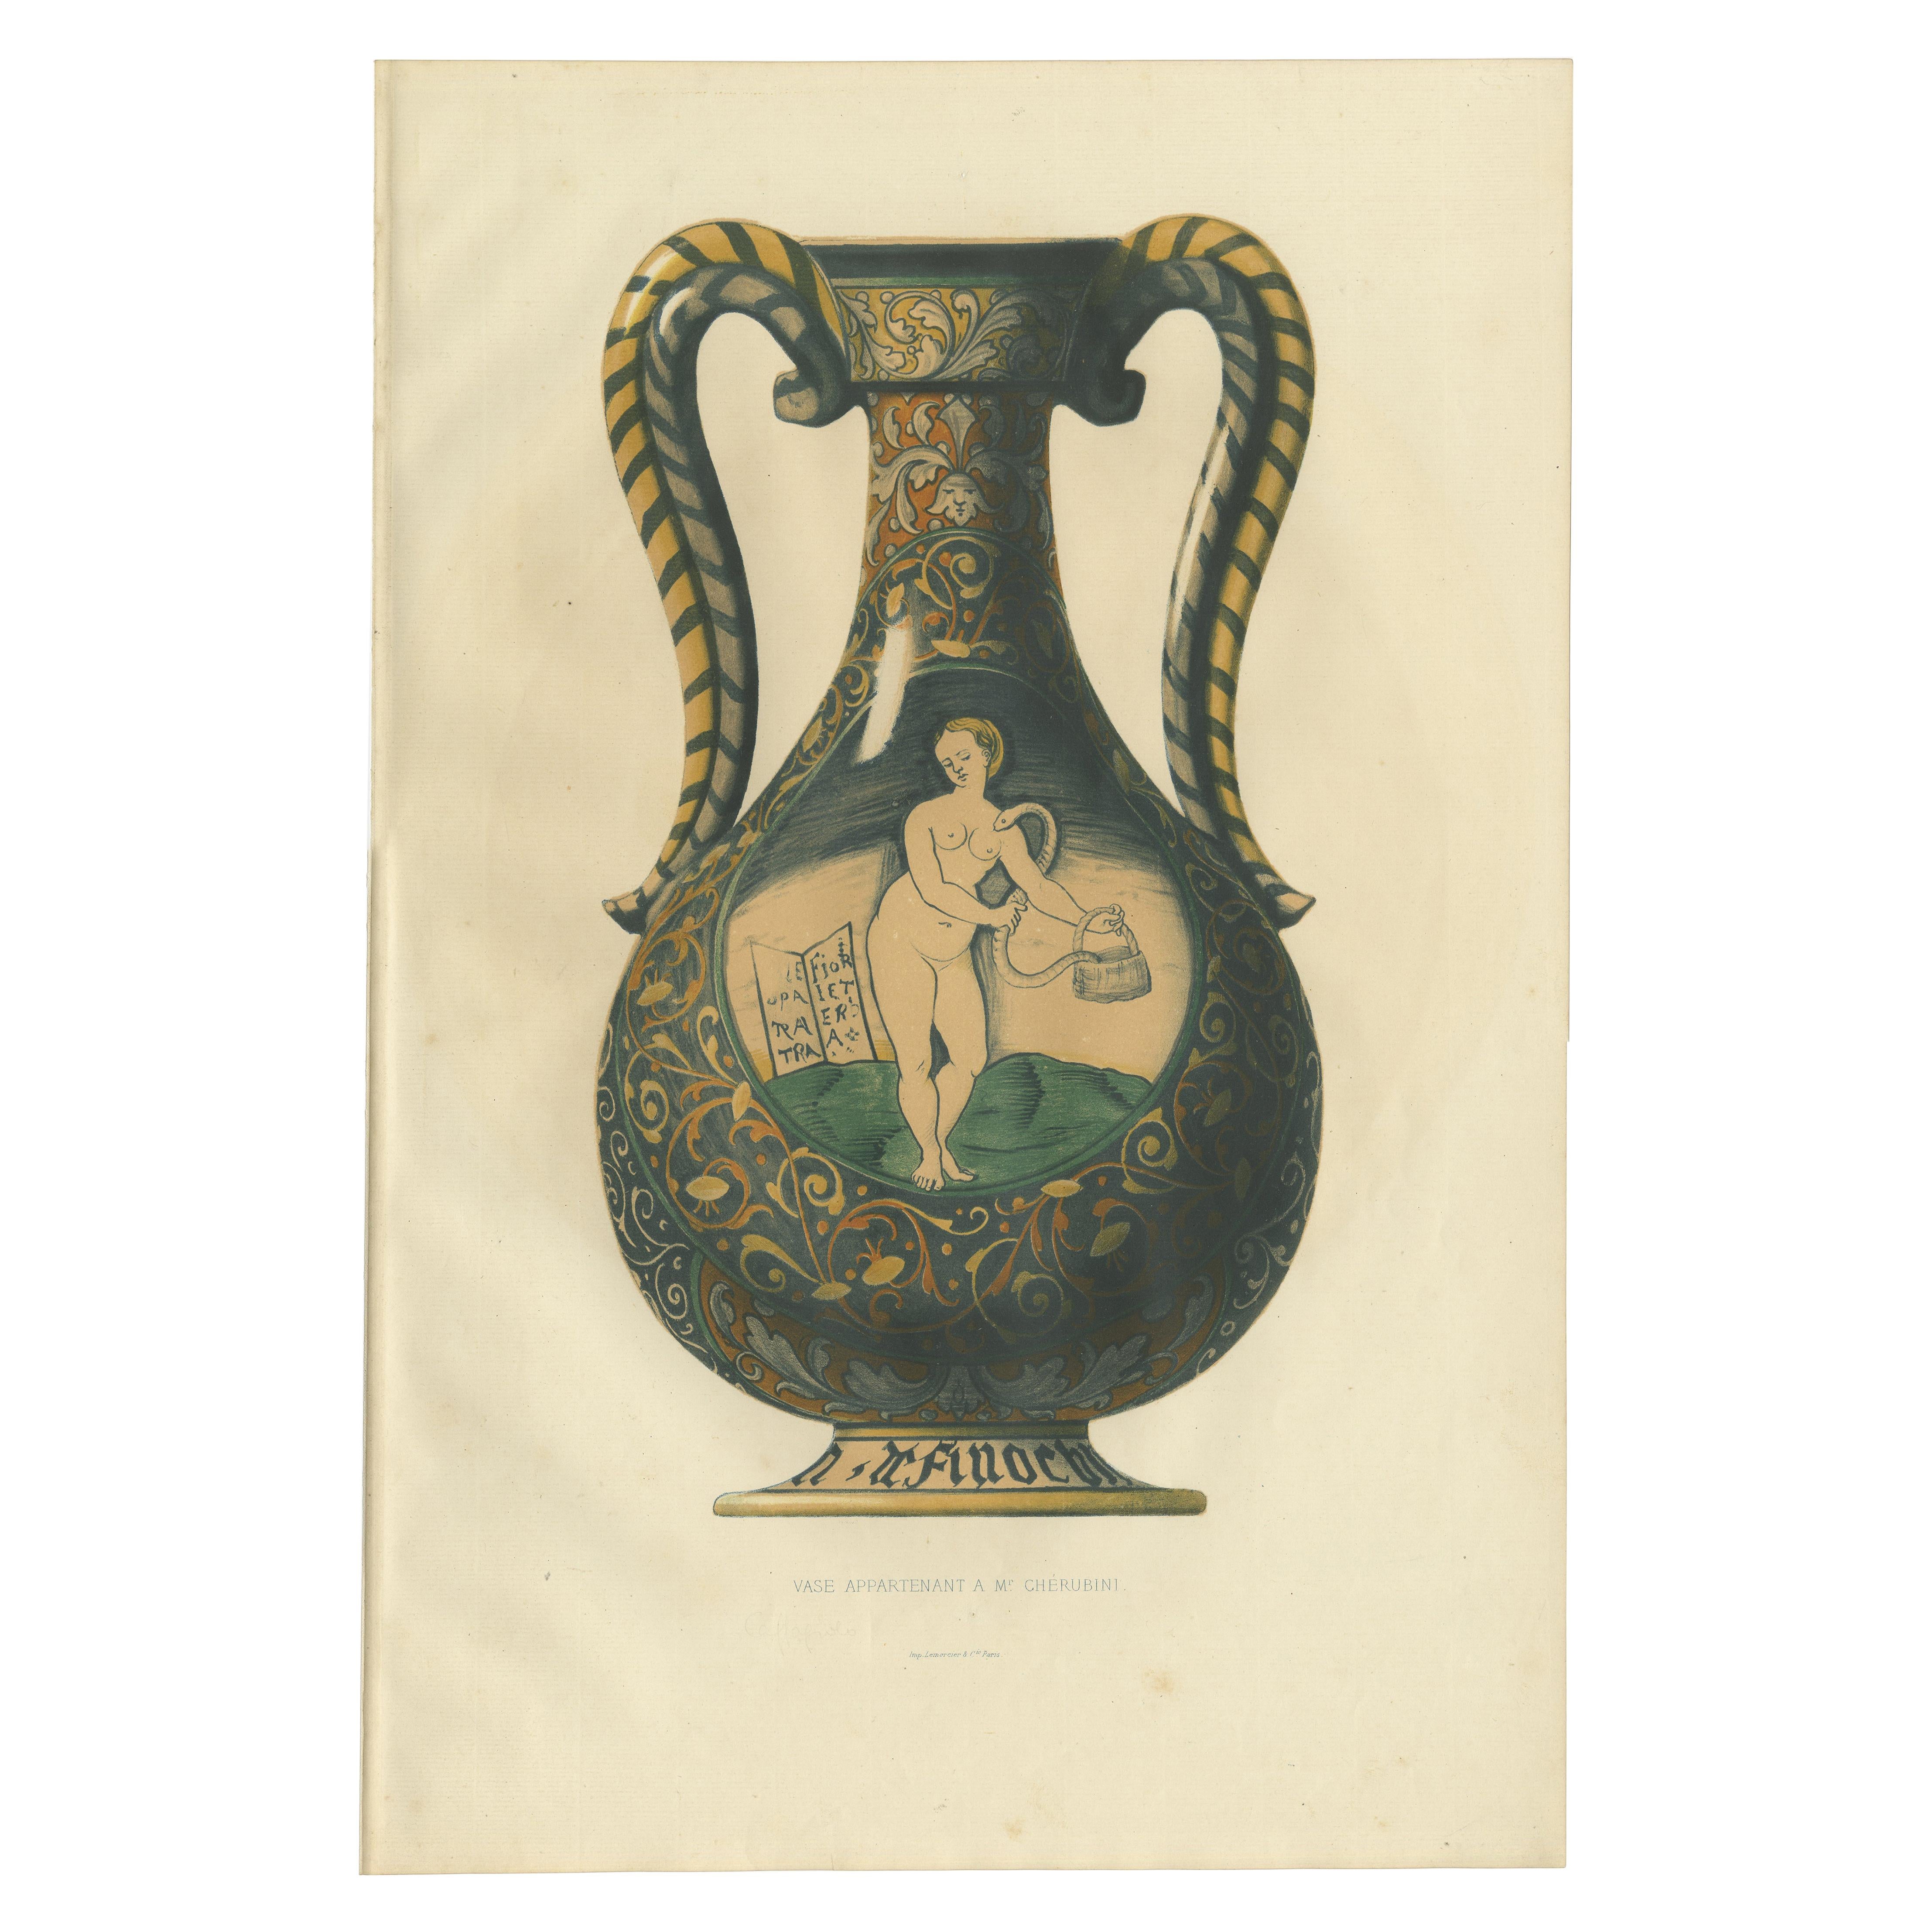 Antique Print of a Vase of Mr. Cherubini by Delange '1869'